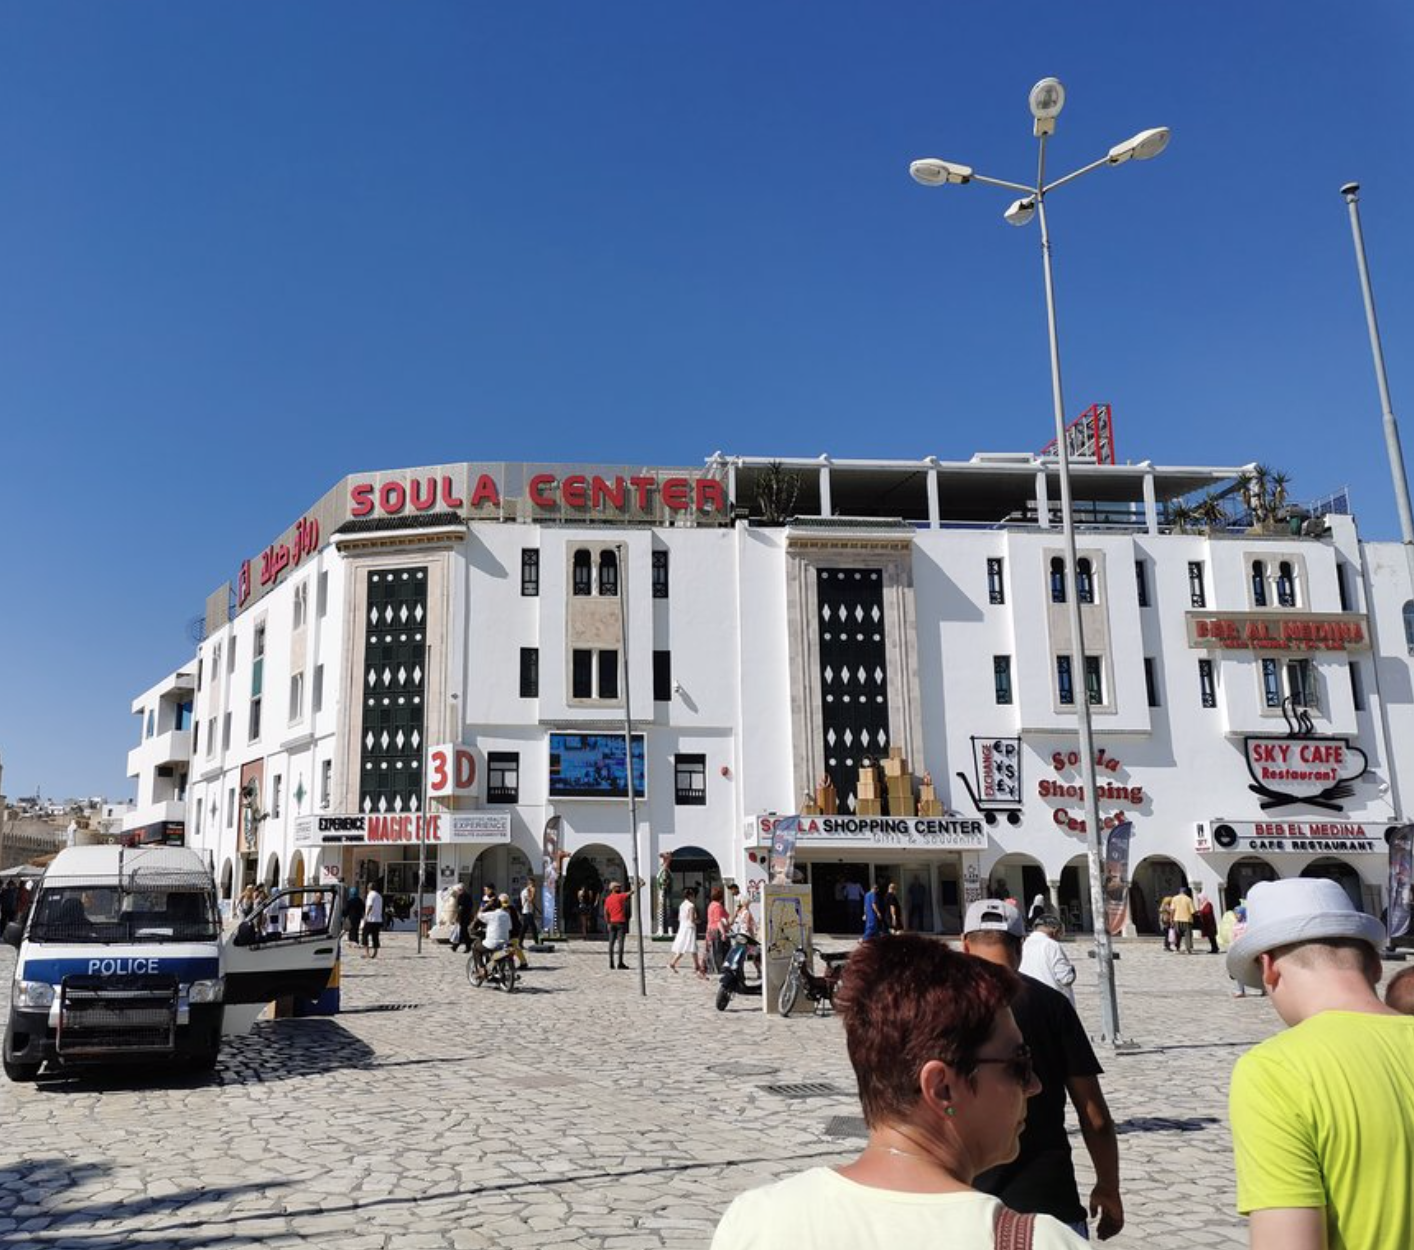 Soula Center, Sousse, Tunisia - TripAdvisor Traveler photo submitted by Toncek B (Oct 2019)